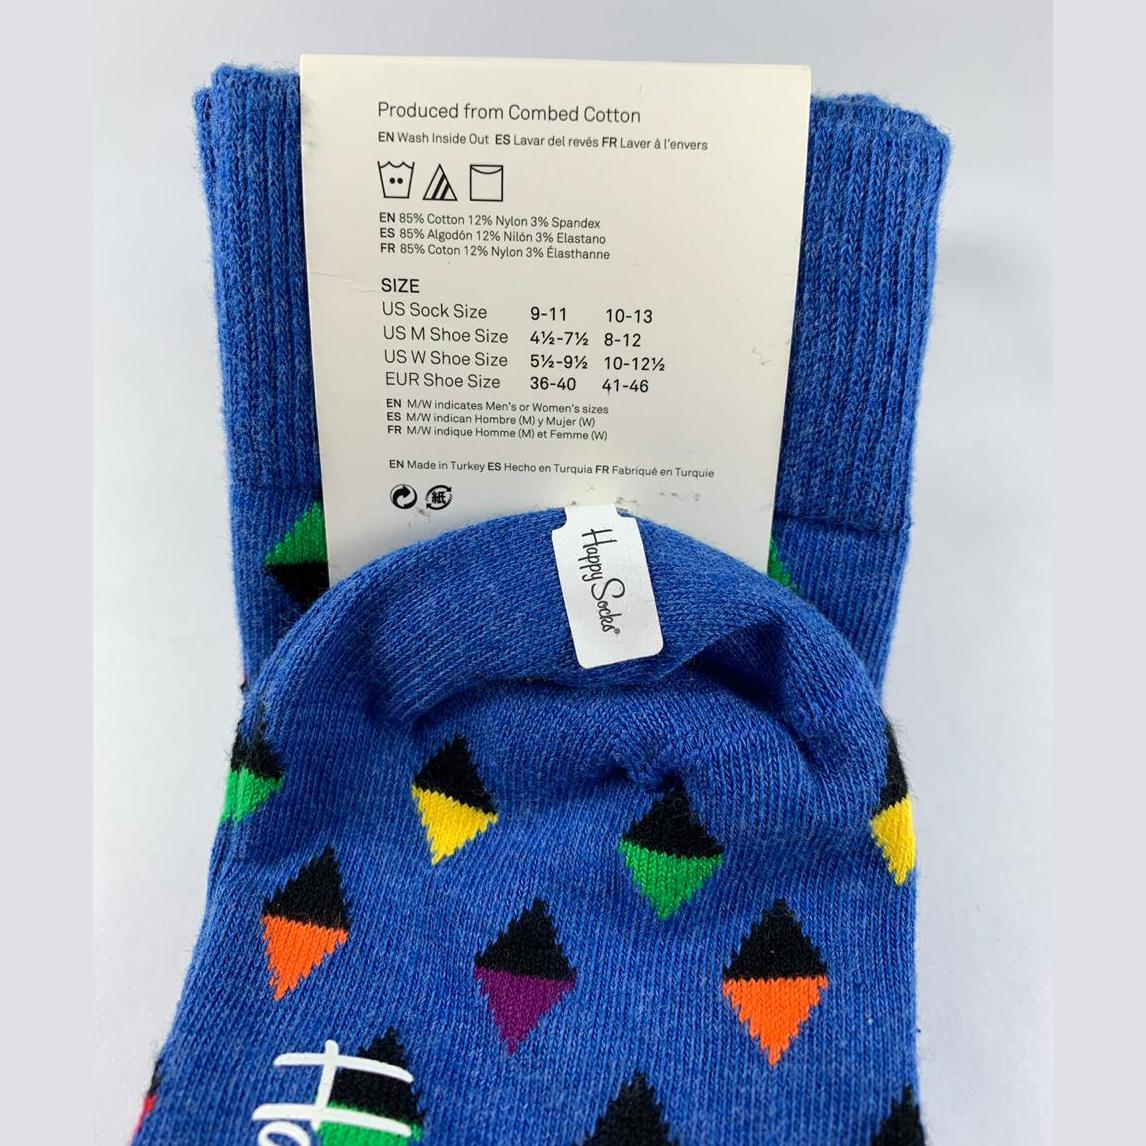 Medias Hombre Happy Socks, azul con rombos de colores. - The Gift Shop Costa Rica